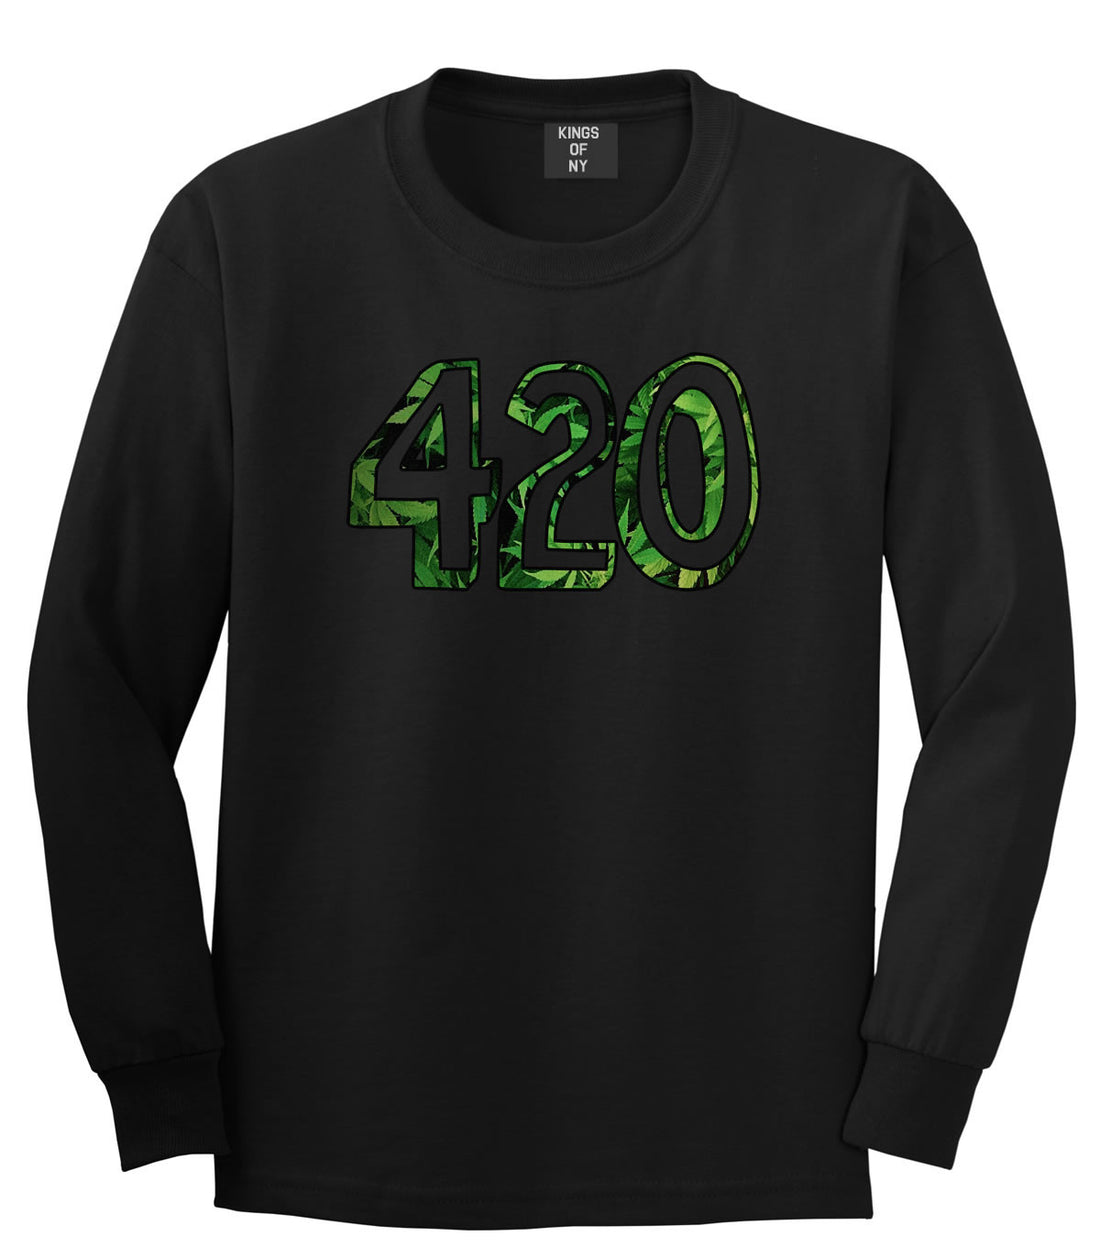  420 Weed Marijuana Print Long Sleeve T-Shirt in Black by Kings Of NY